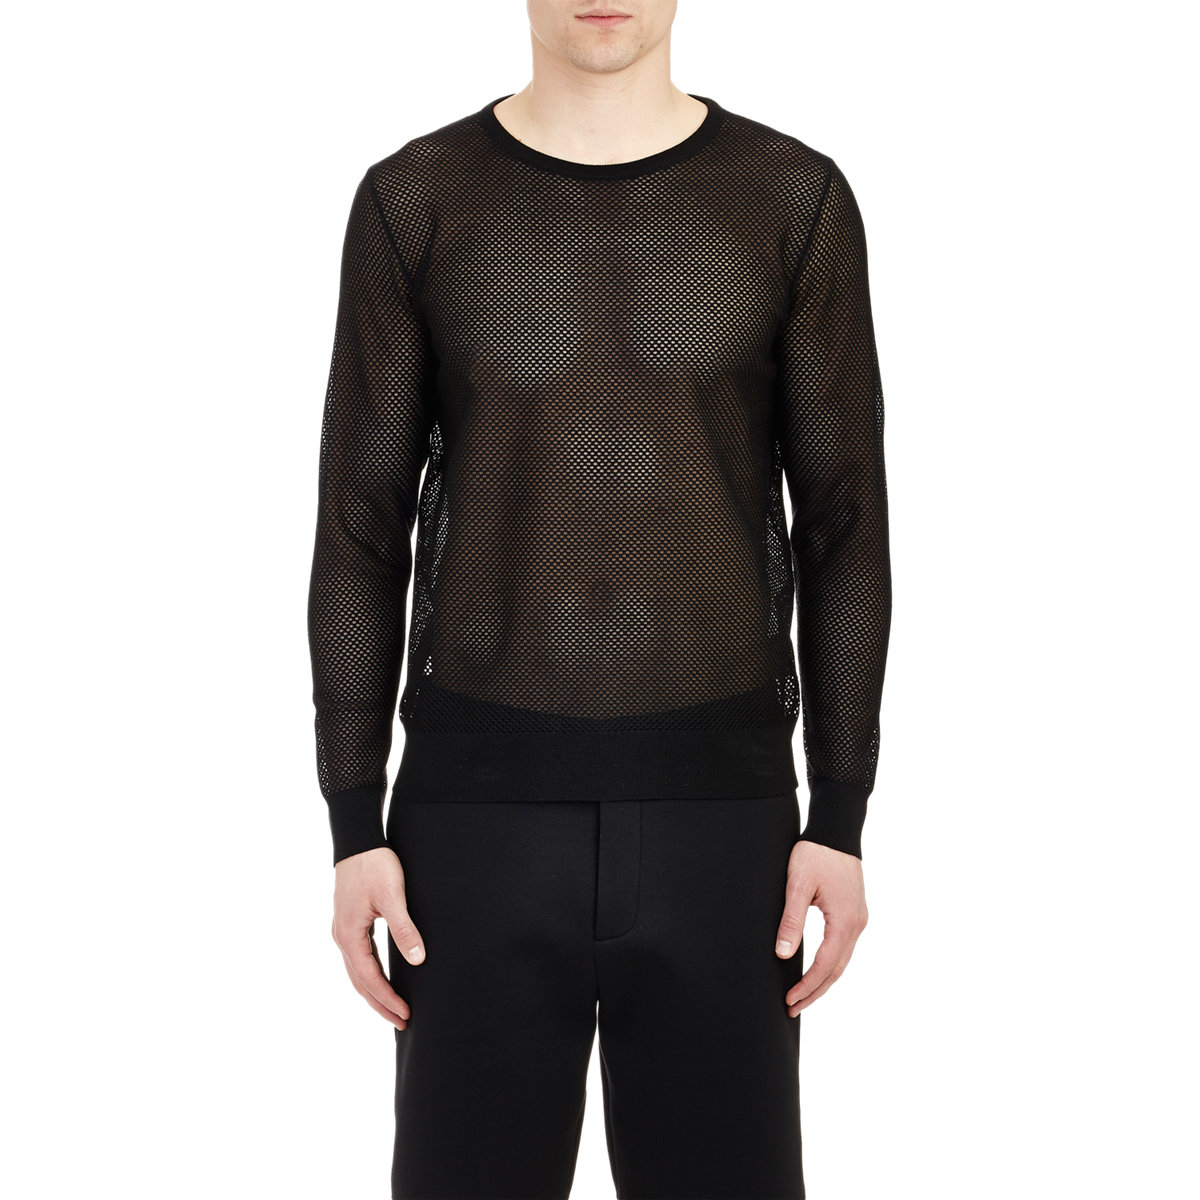 Lyst - Tim Coppens Mesh Sweater in Black for Men